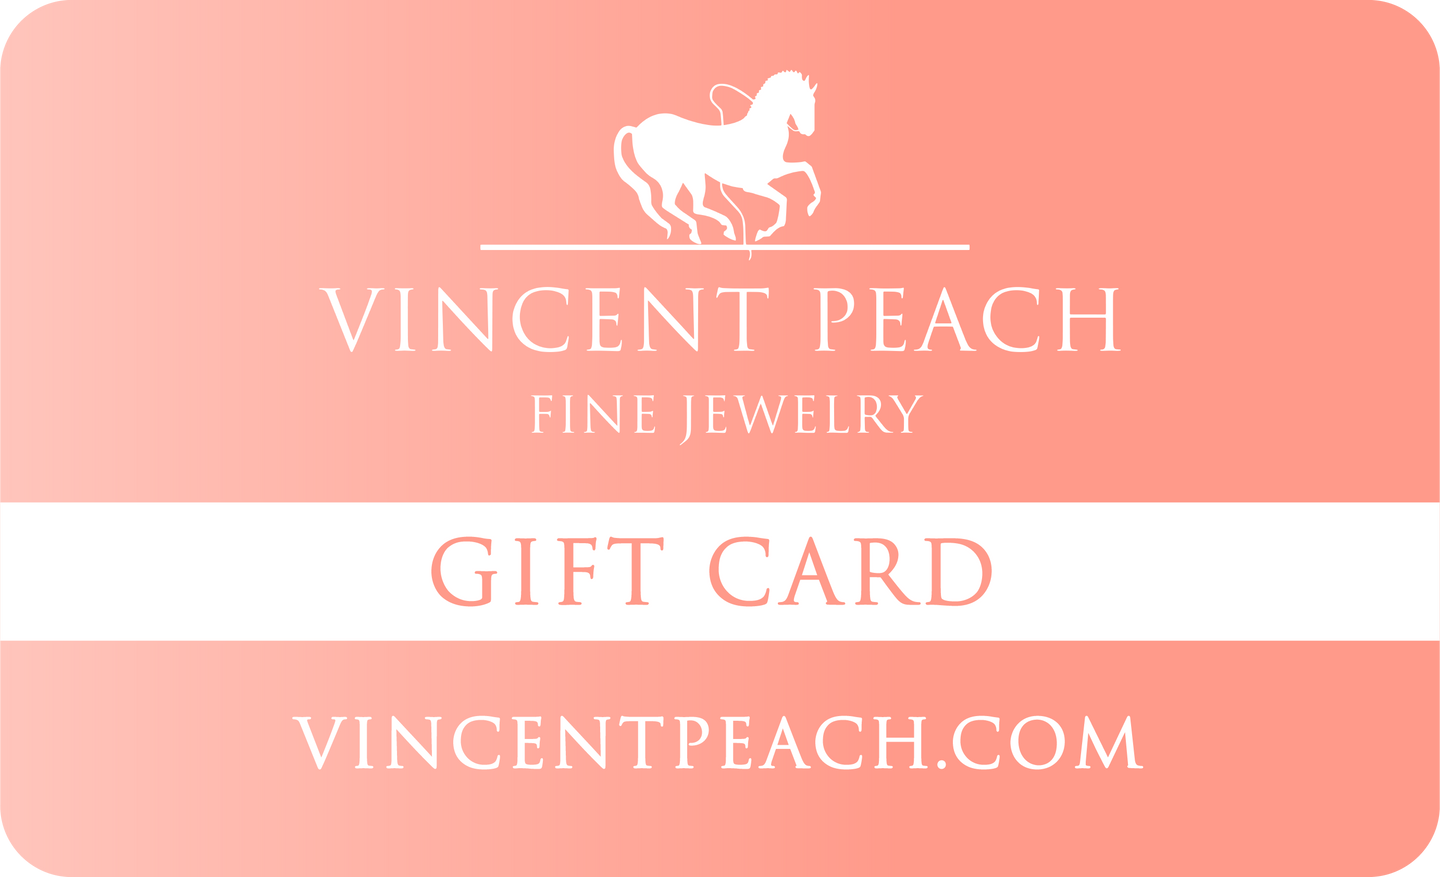 Vincent Peach Gift Card